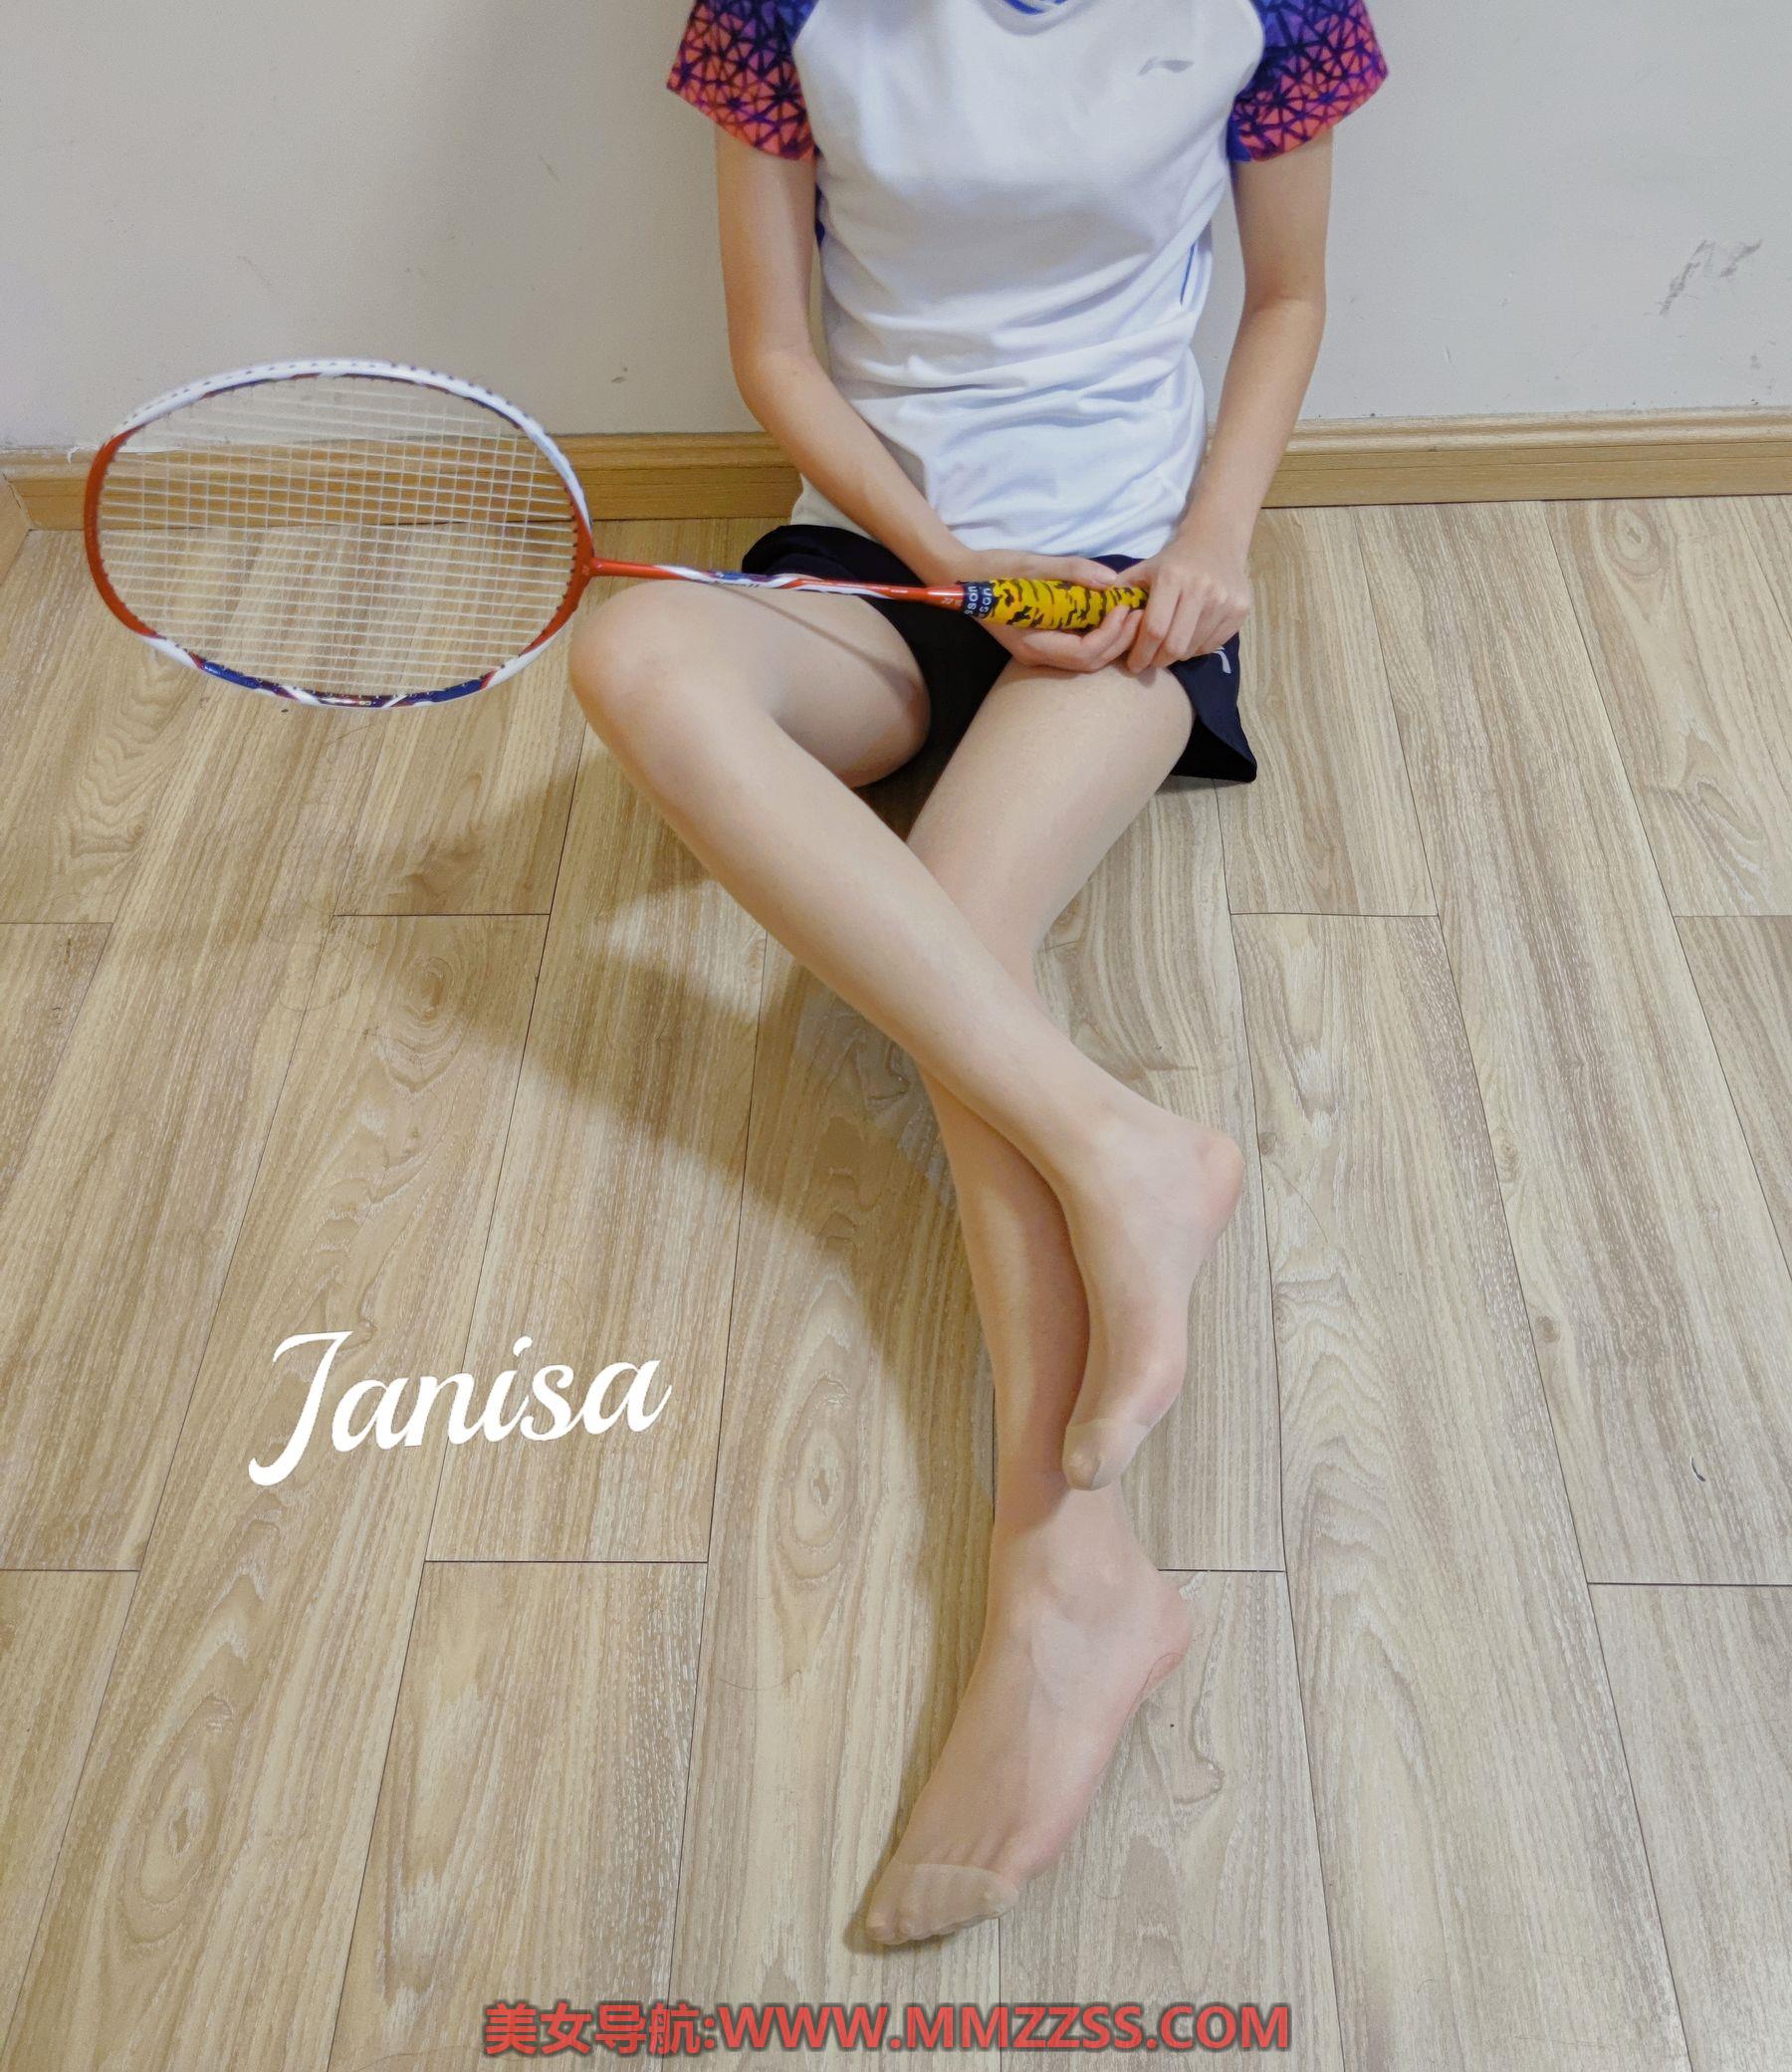 Janisa - 羽毛球宝贝